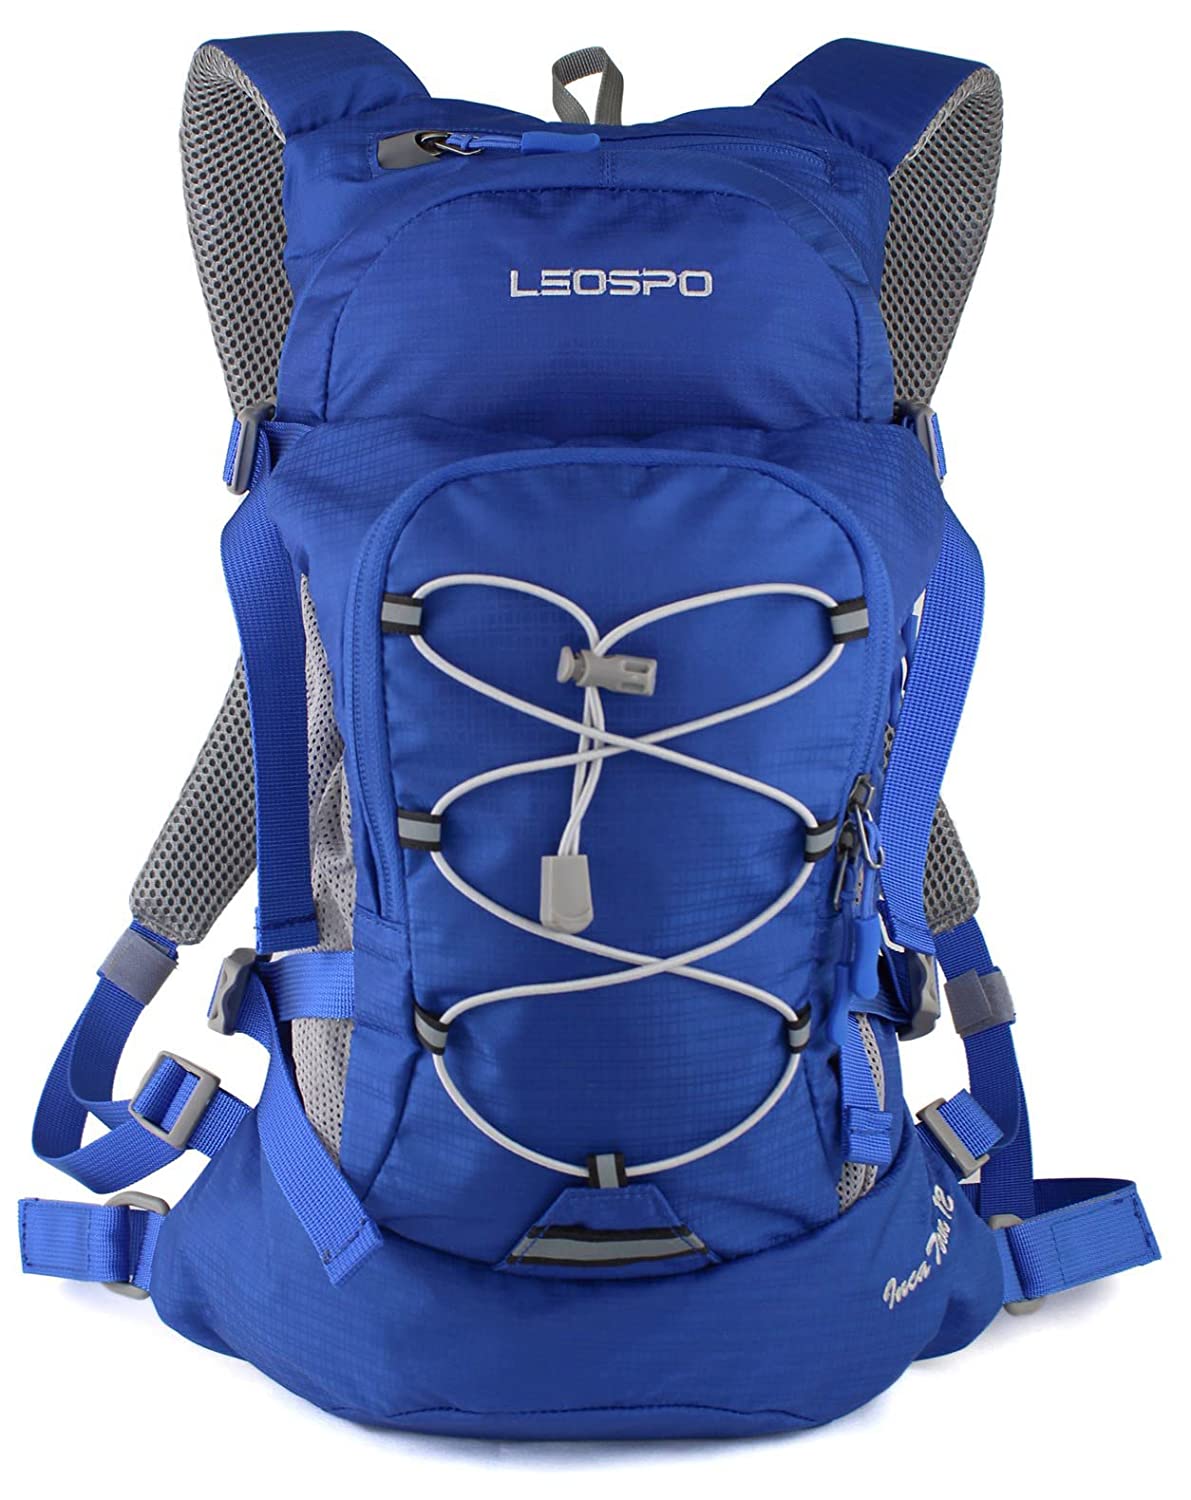 【LEOSPO】軽量・コンパクト サイクリングバッグ